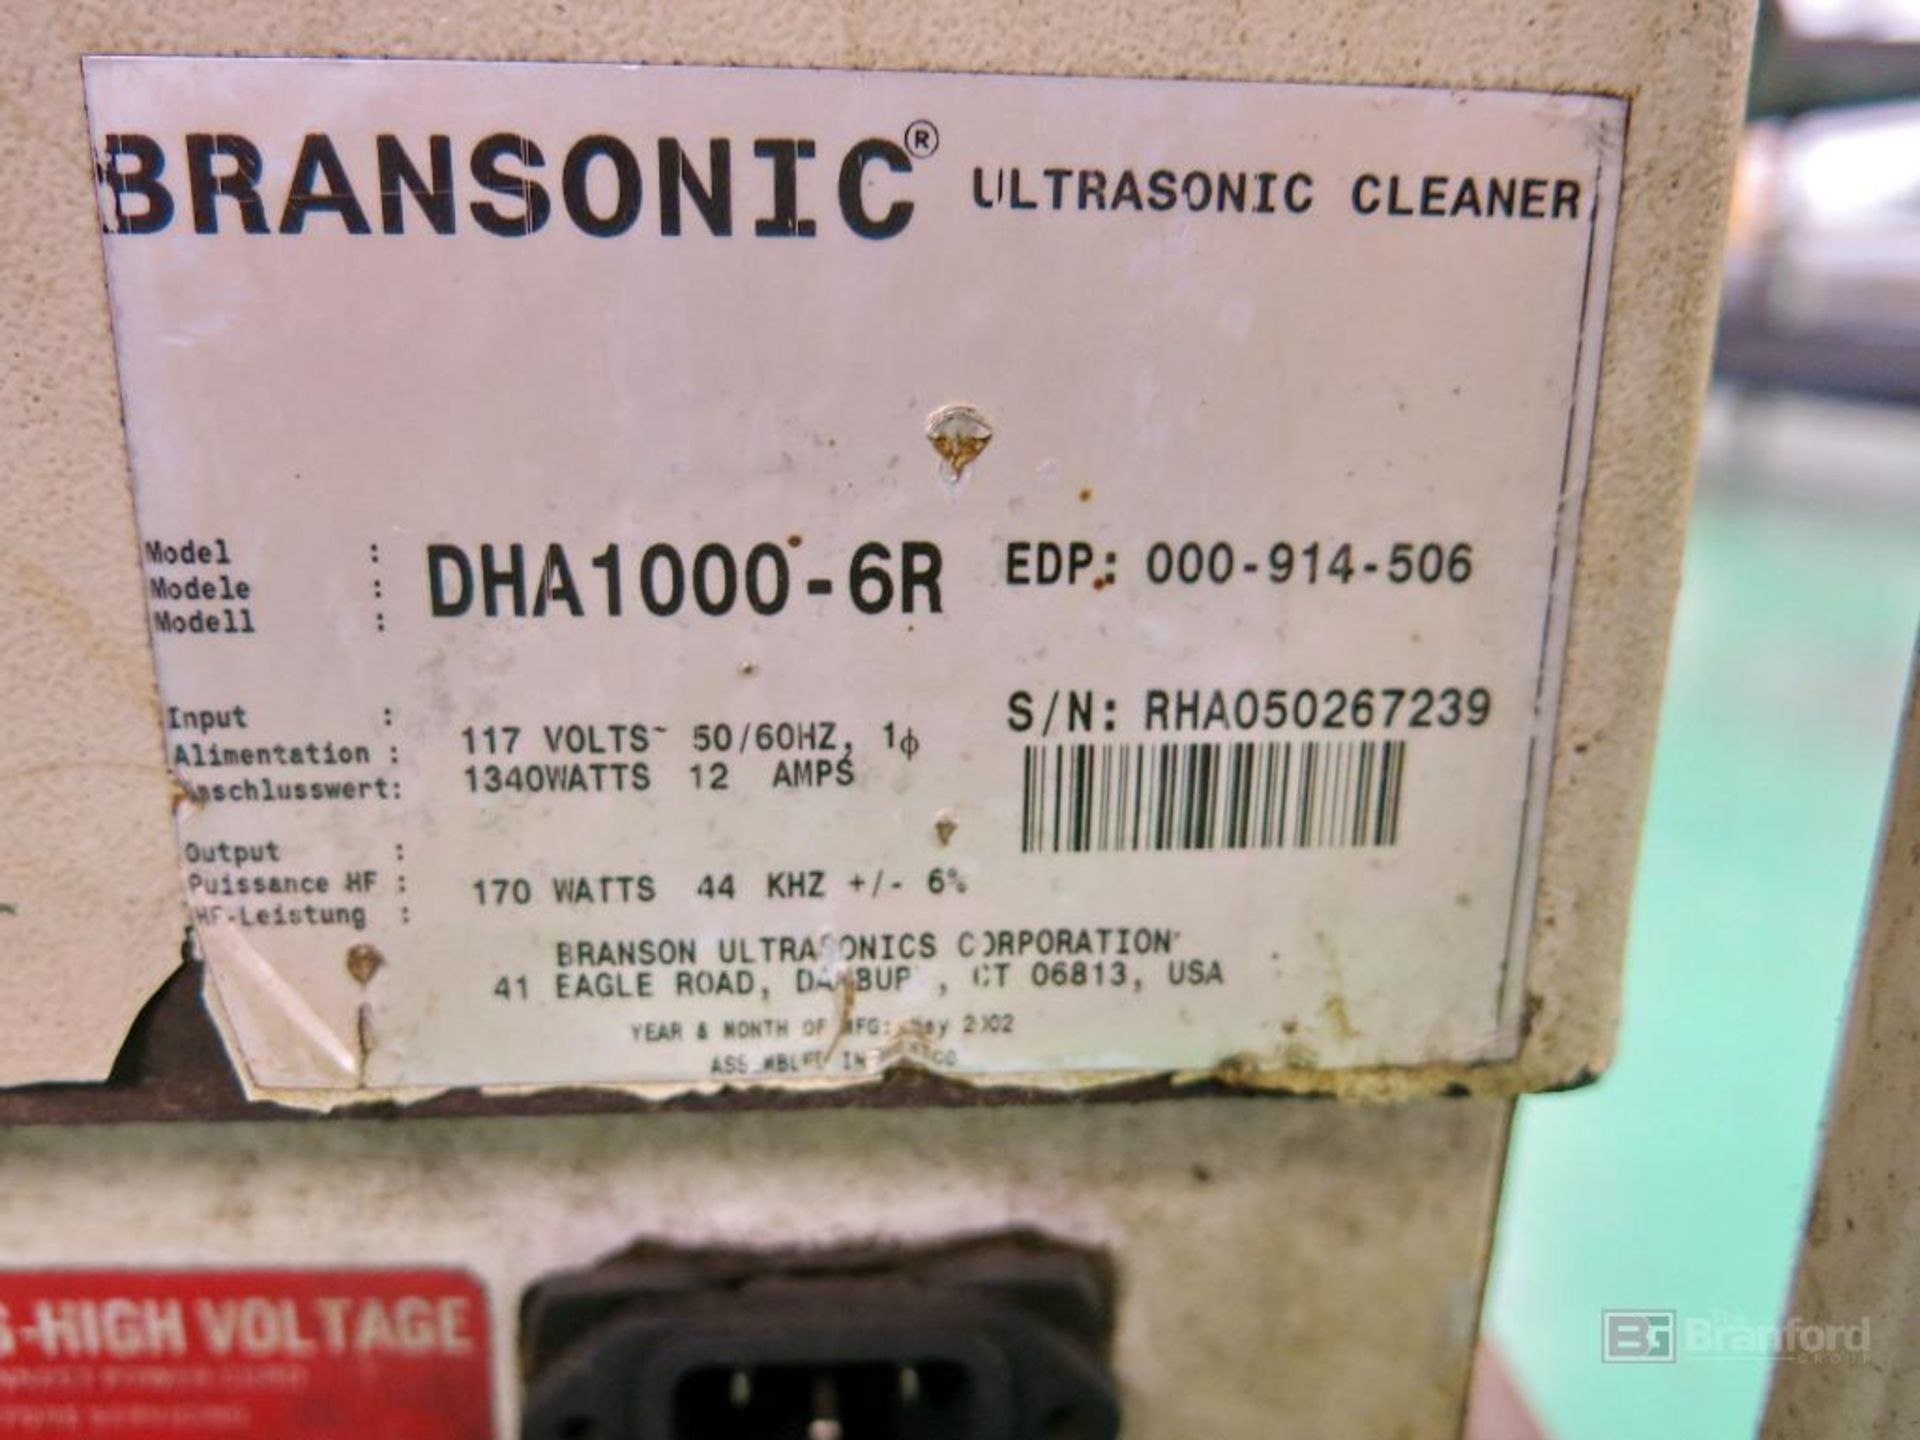 Bransonic Model DHA1000-6R Ultrasonic Cleaner - Image 2 of 2